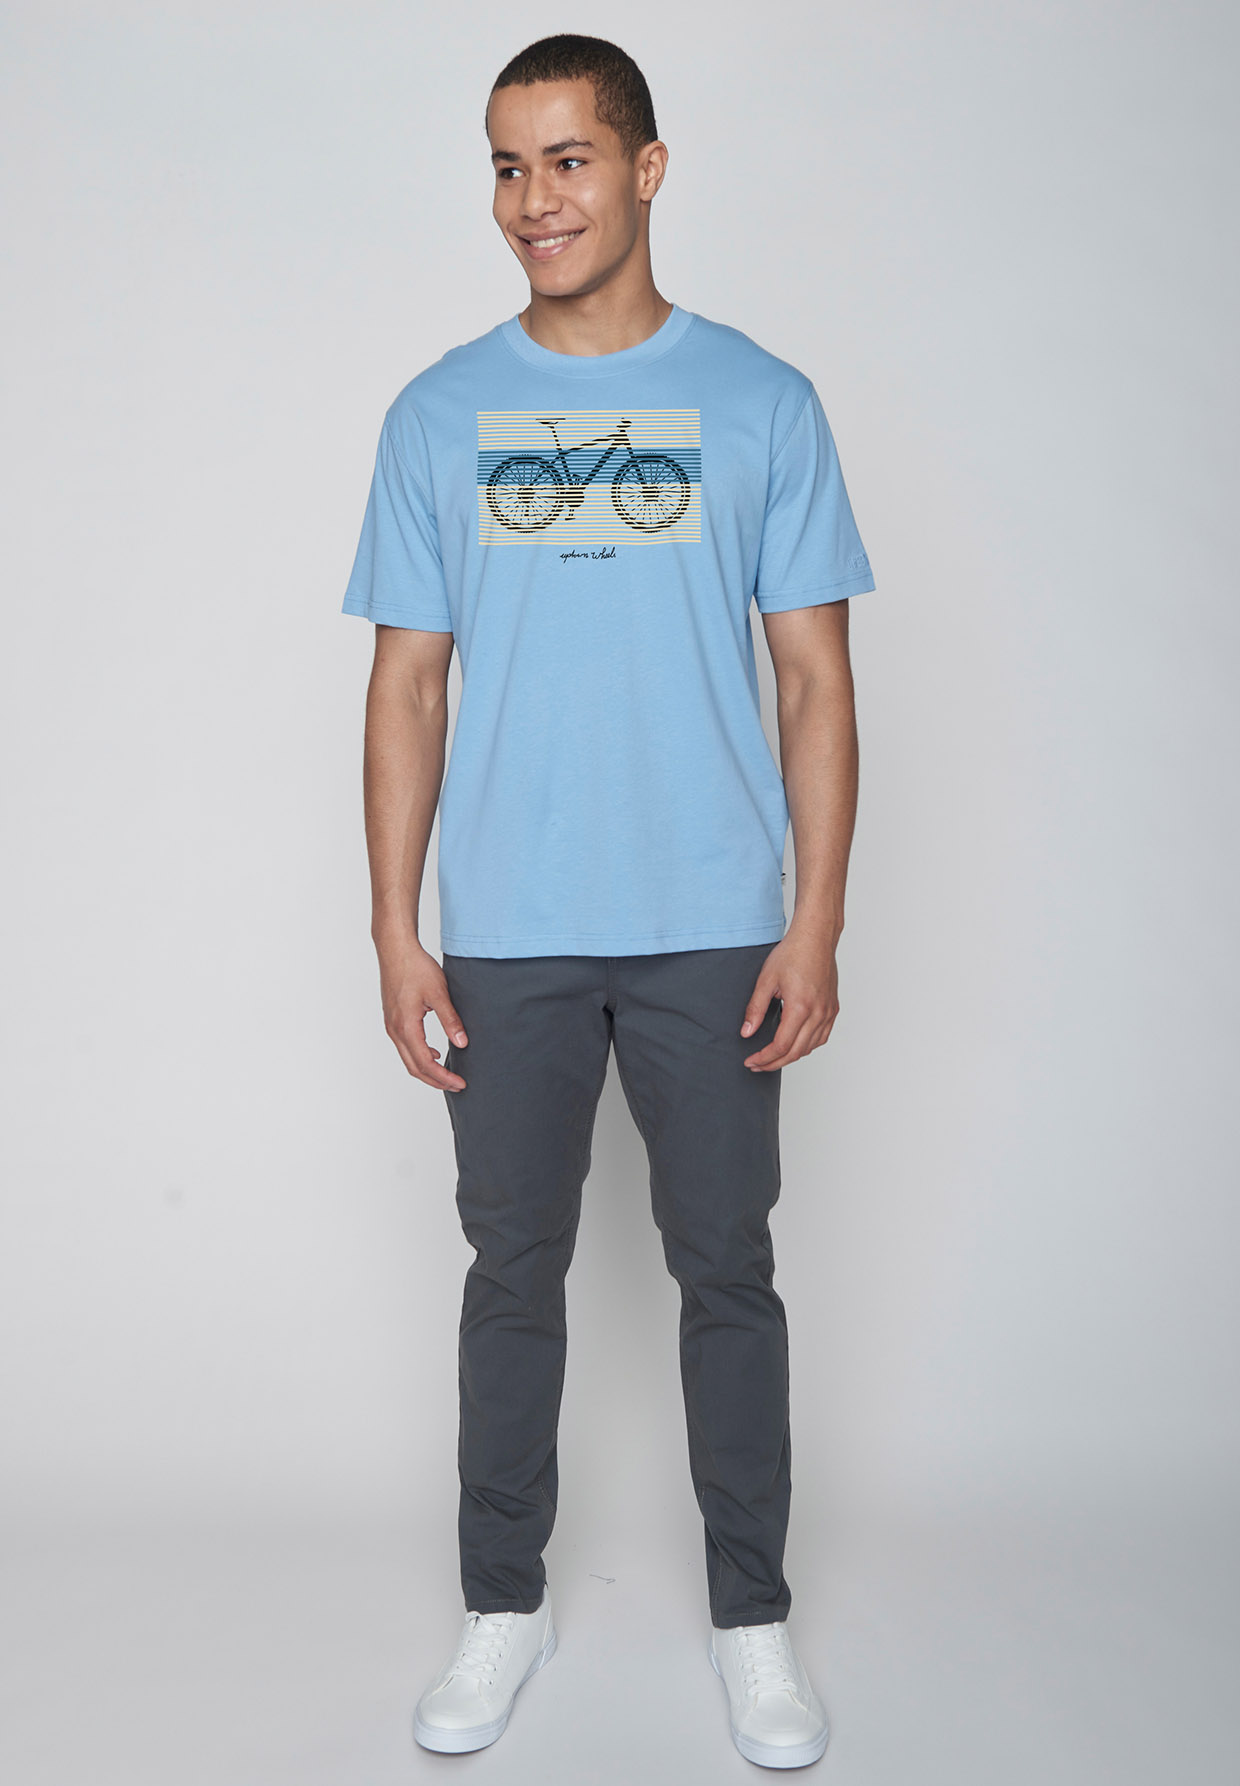 Print T-Shirt Bike Urban Cycle Fusion Slate Blue